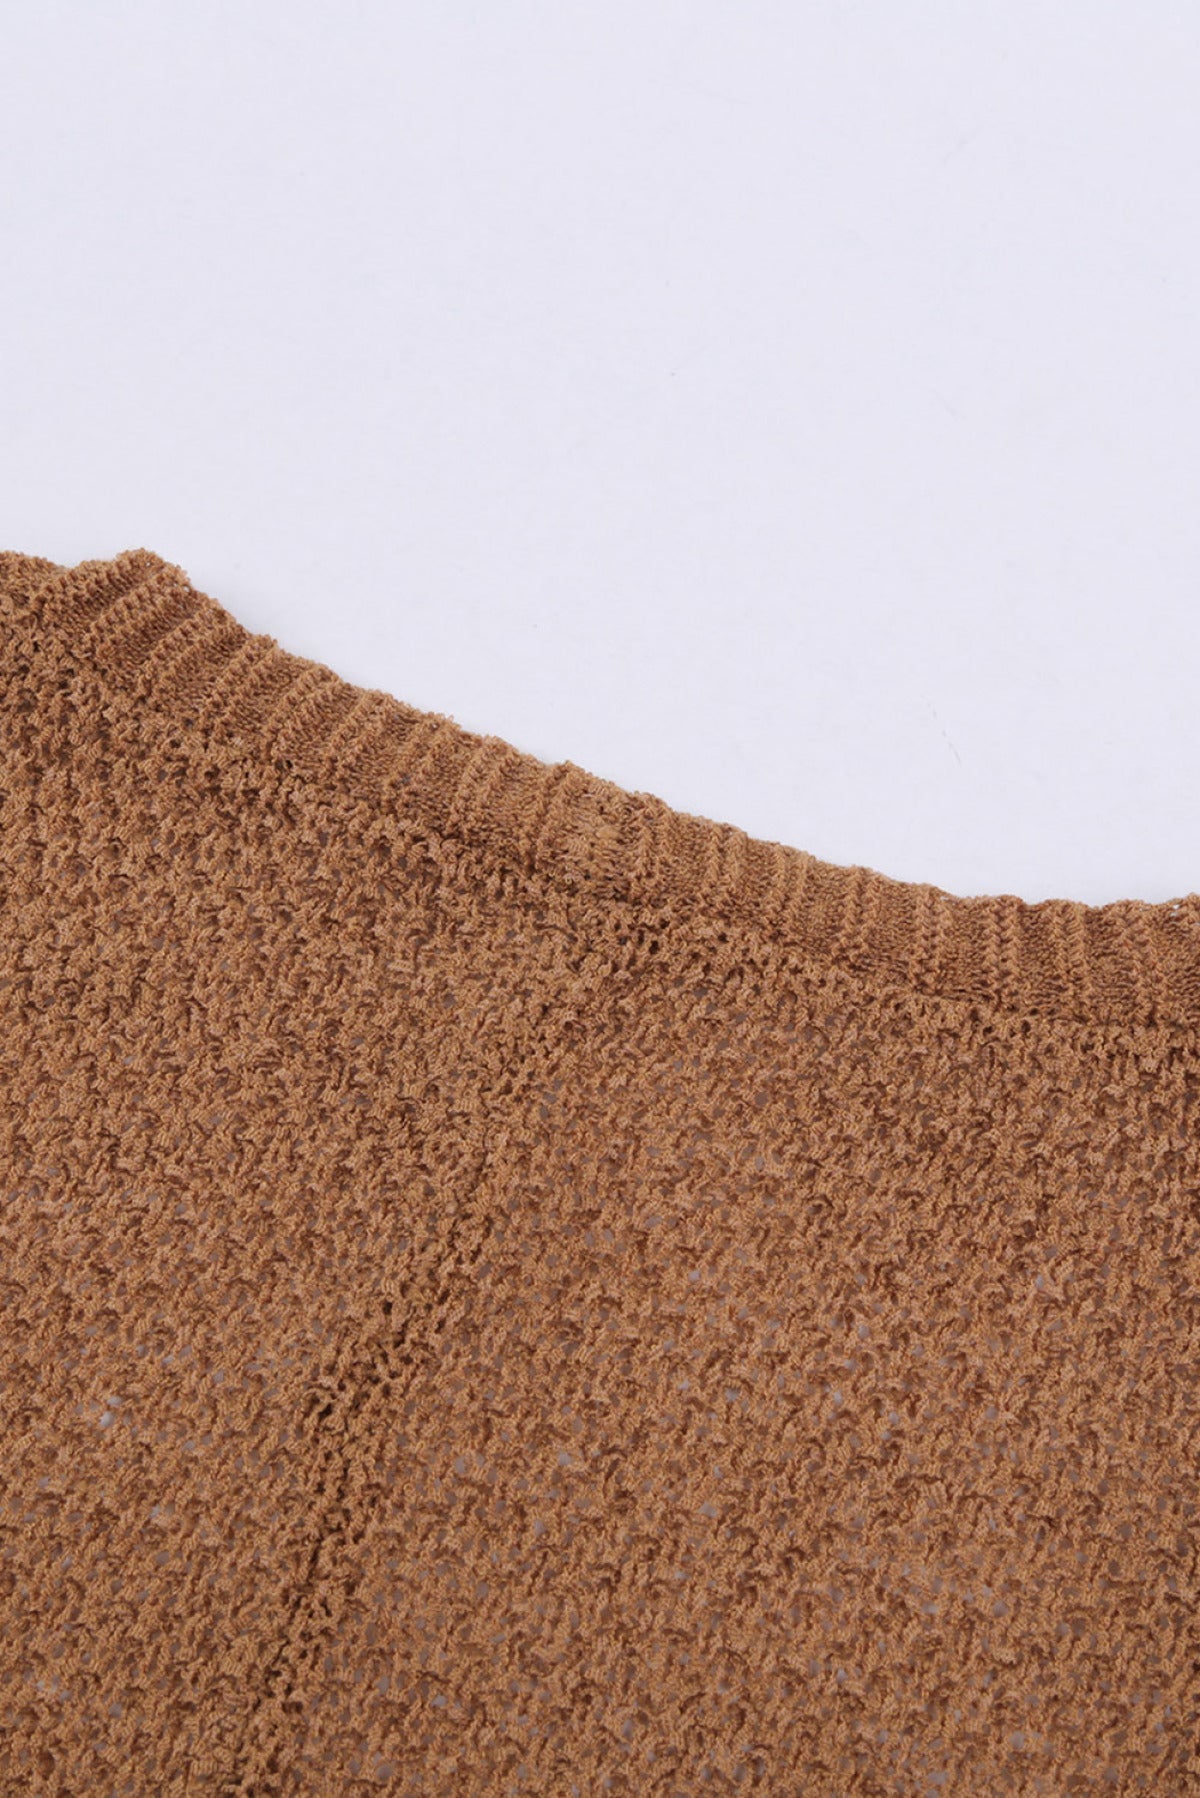 Brown Knit Cardigan